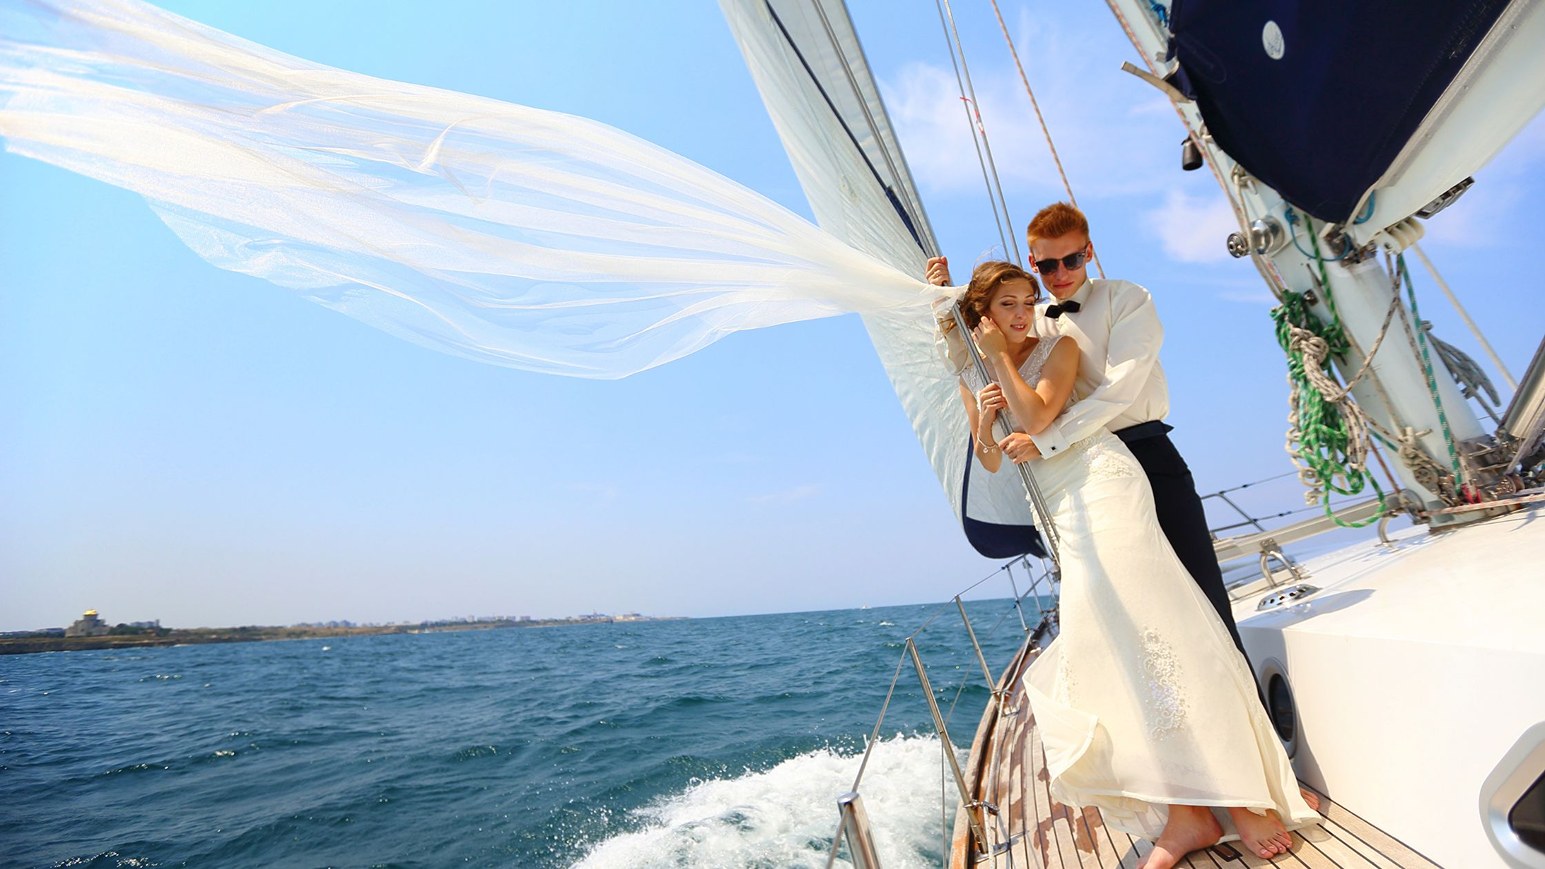 Stunning yacht wedding dress